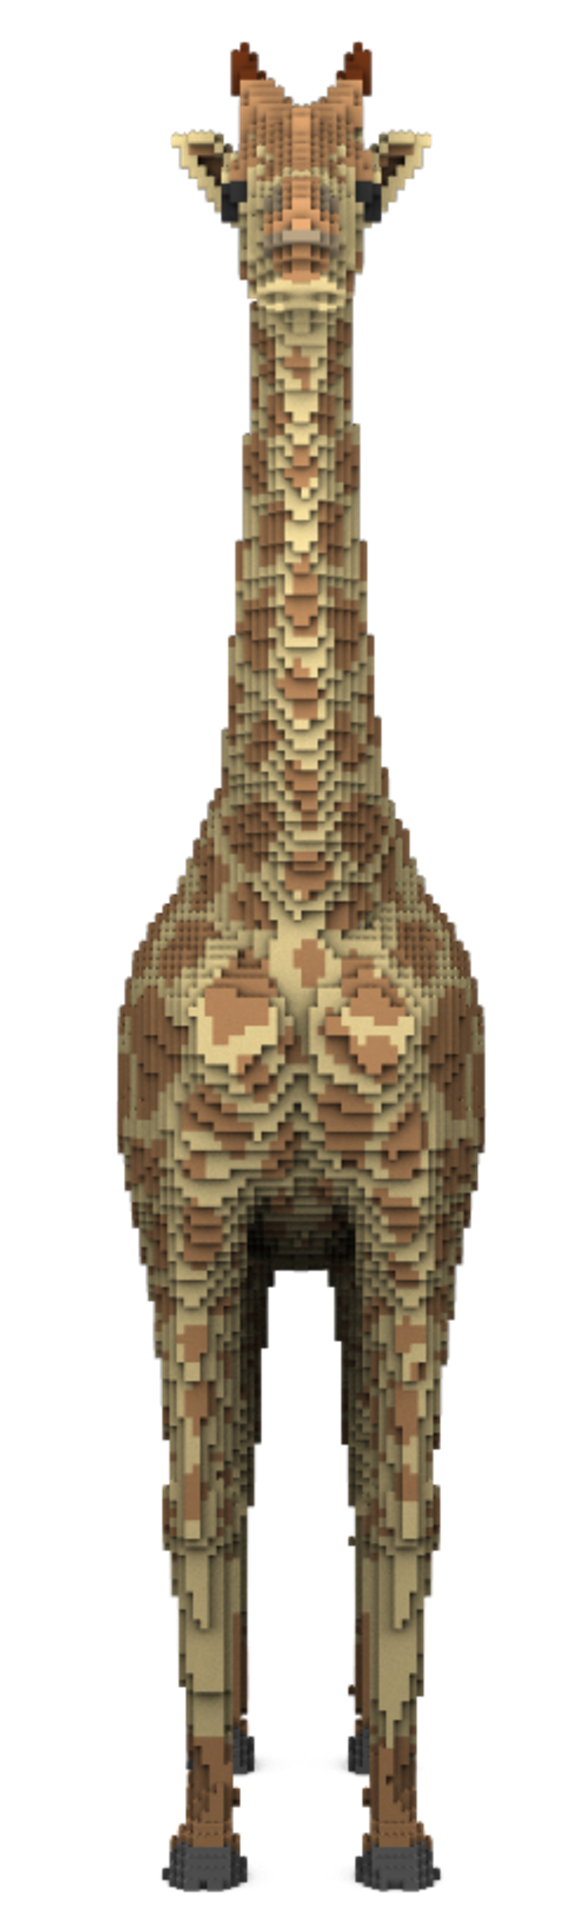 Giraffe - Image 6 of 8